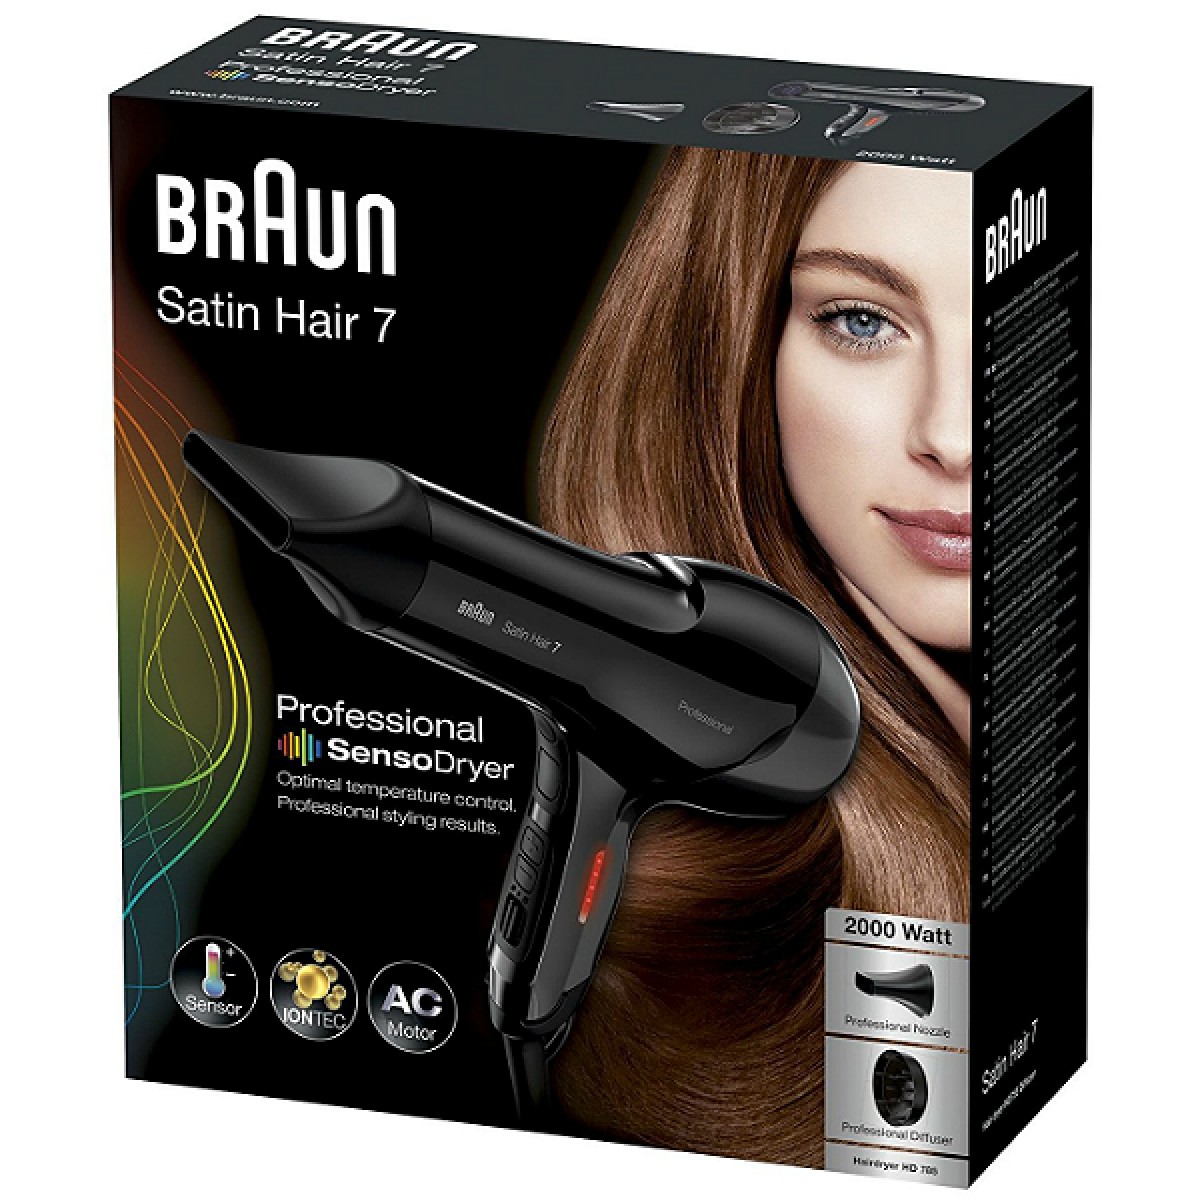 Braun Hairdryer Satin Hair 7 Professional SensoDryer HD 785 Black